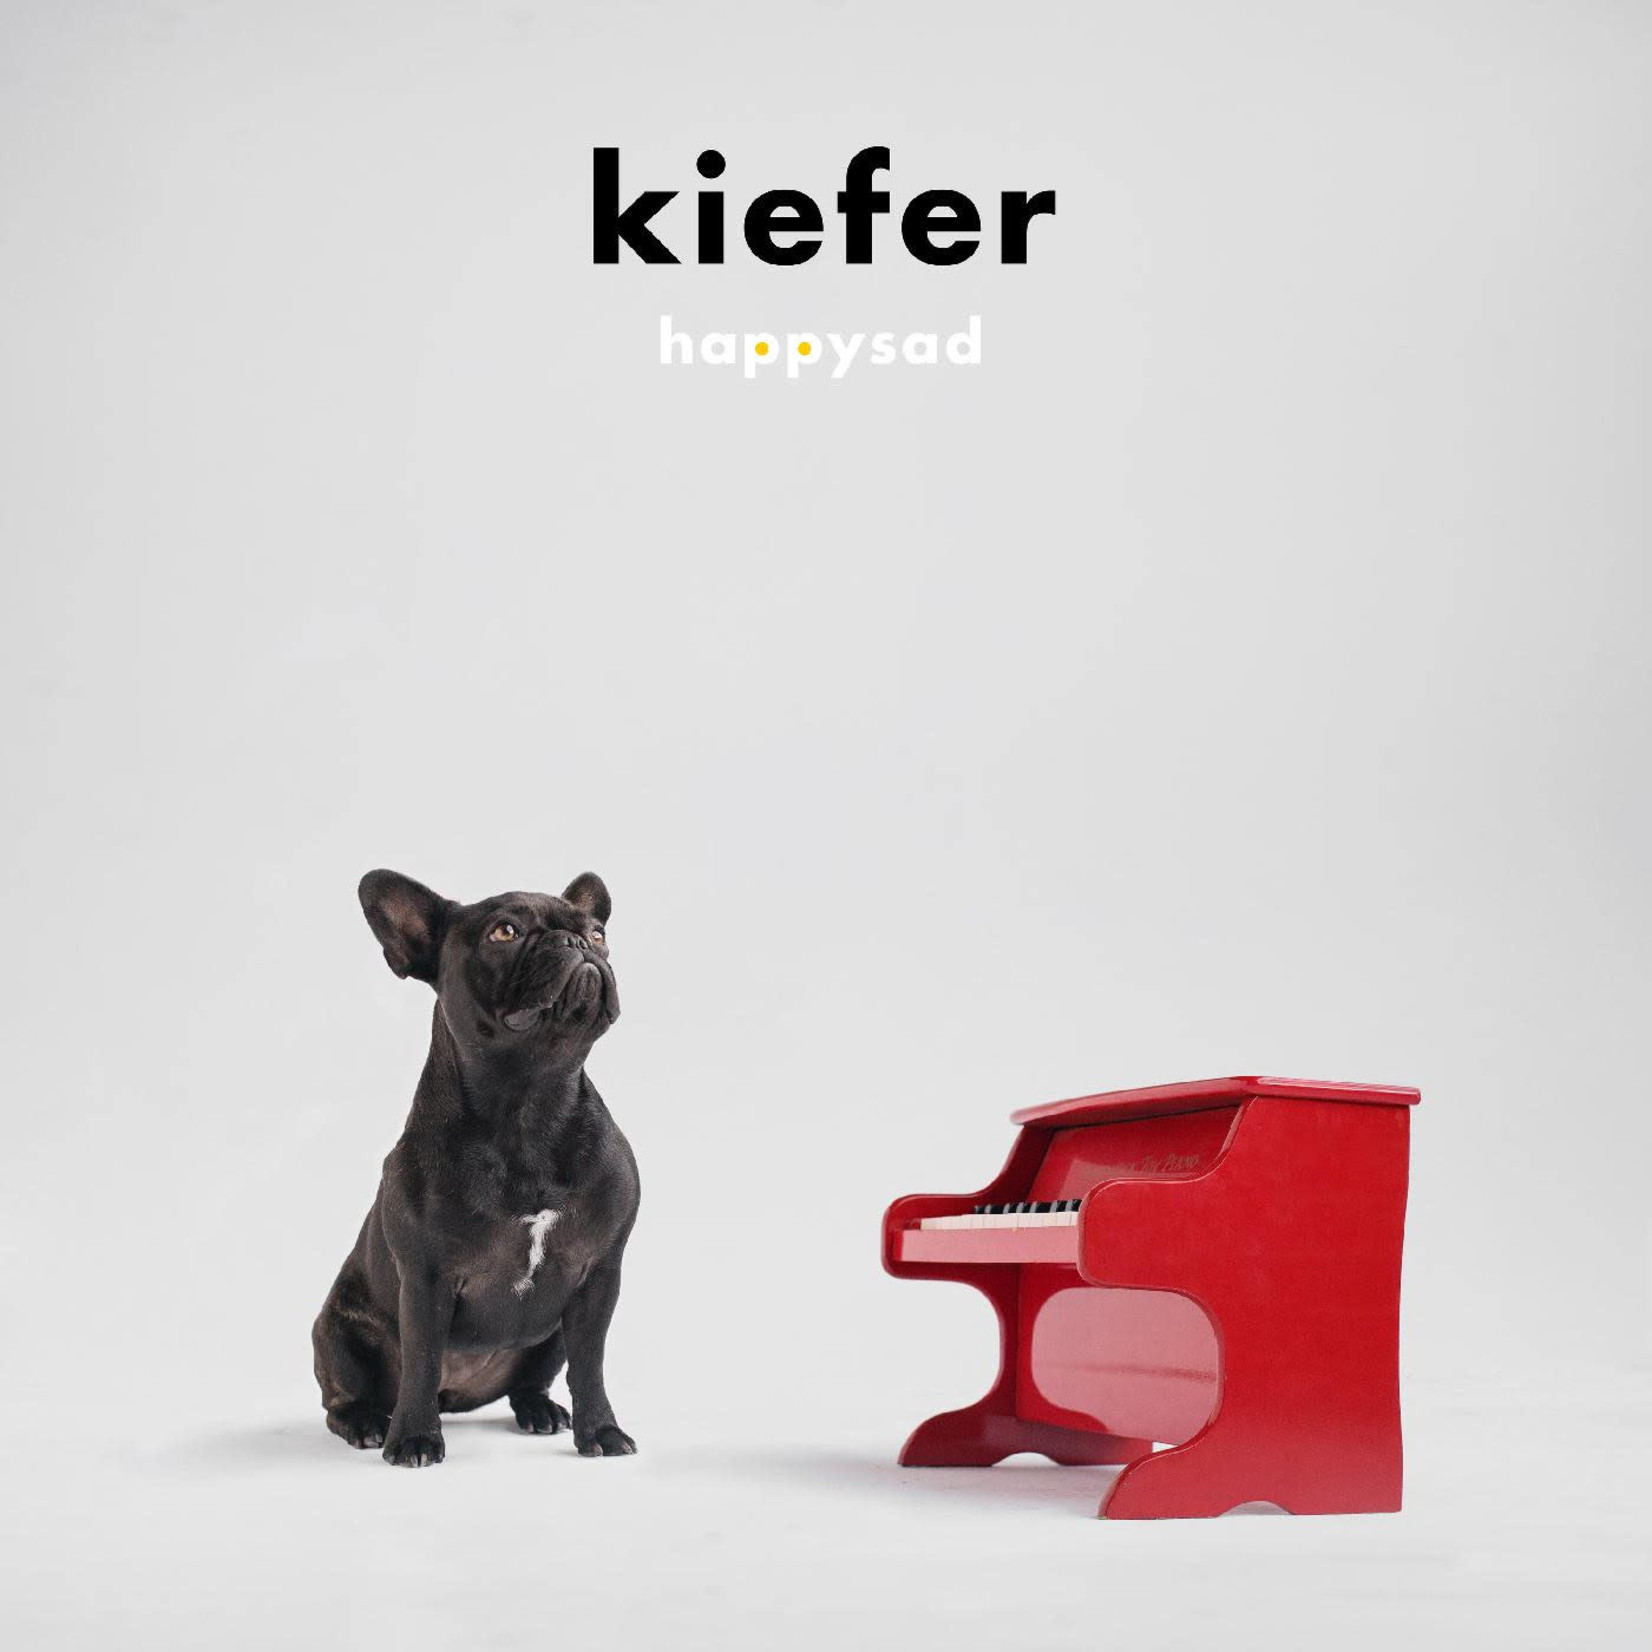 [New] Kiefer - Happysad